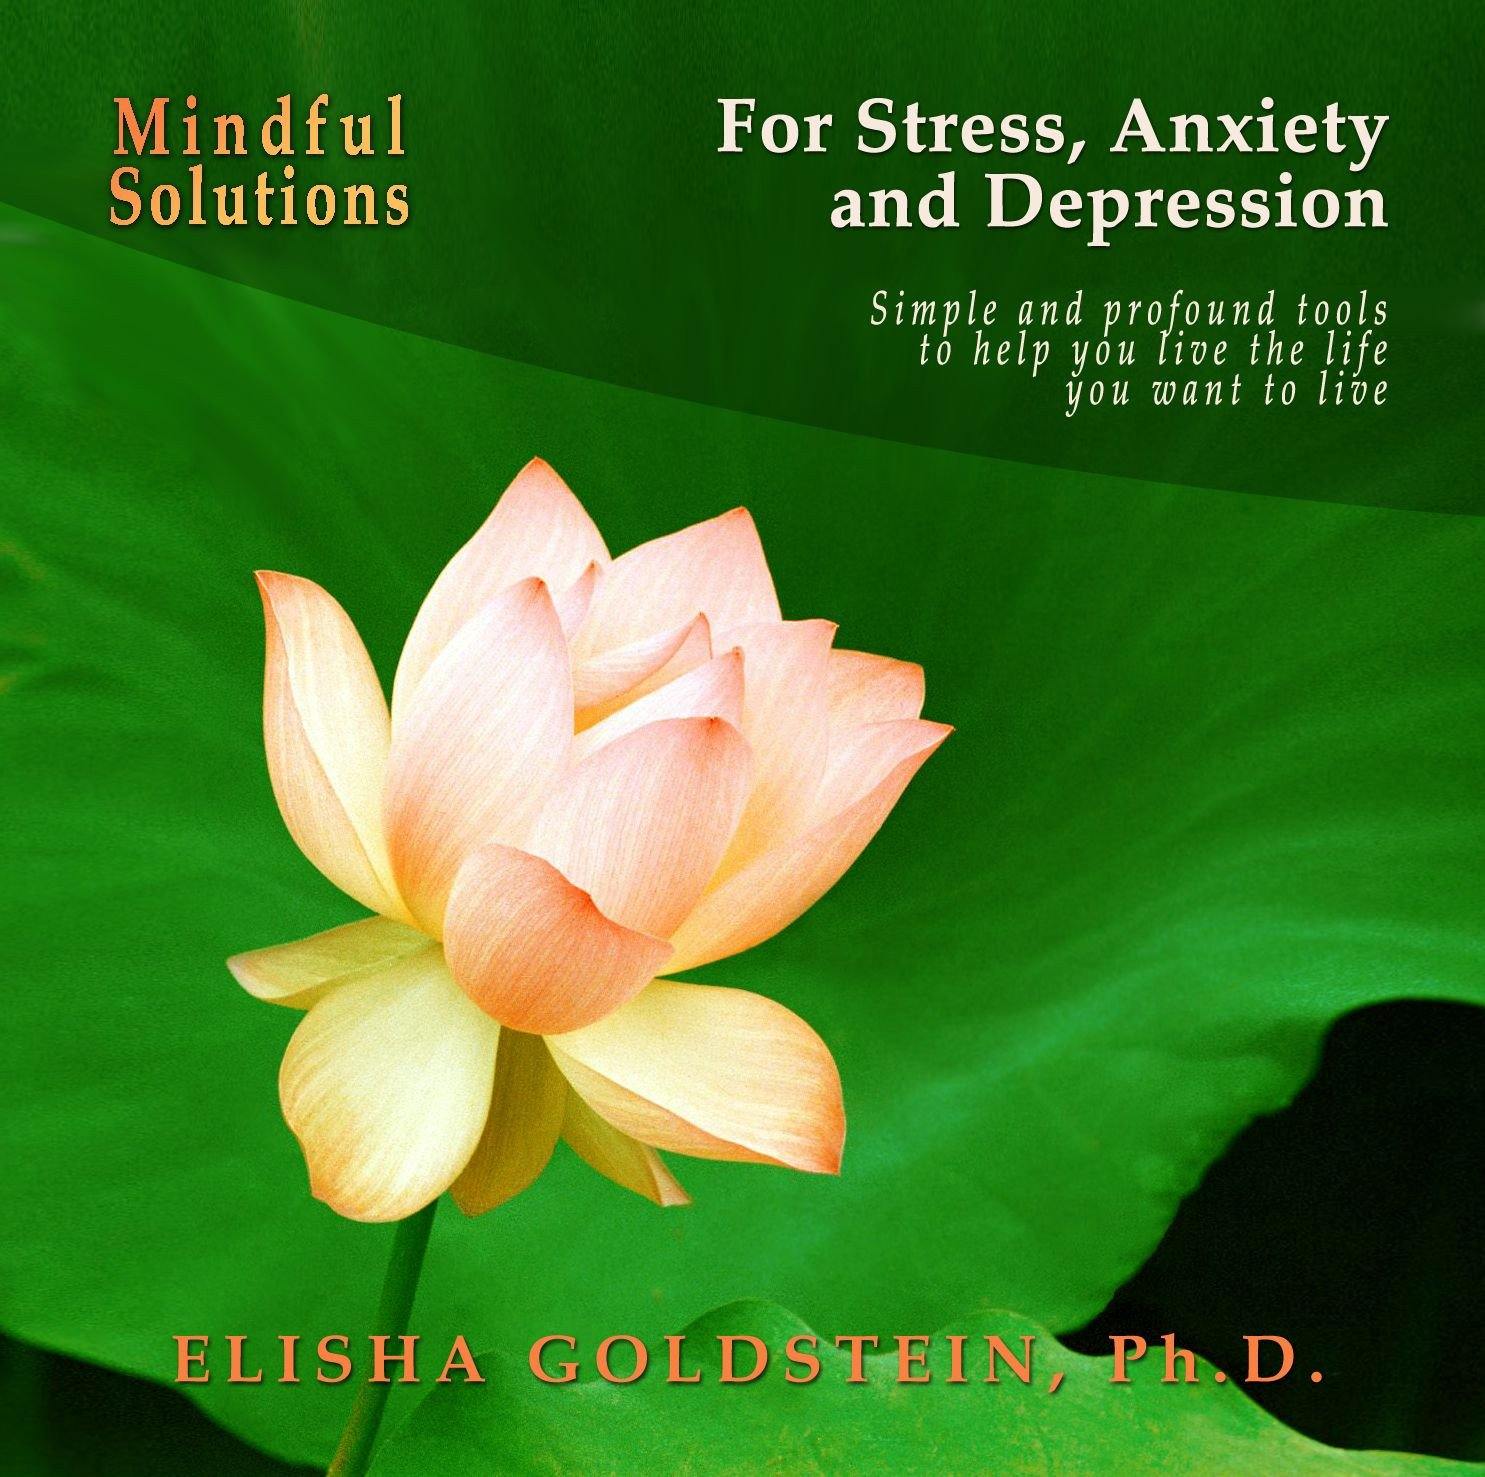 Mindful Solutions for Stress, Anxiety, and Depression with Elisha Goldstein Audio Program Elisha Goldstein - BetterListen!